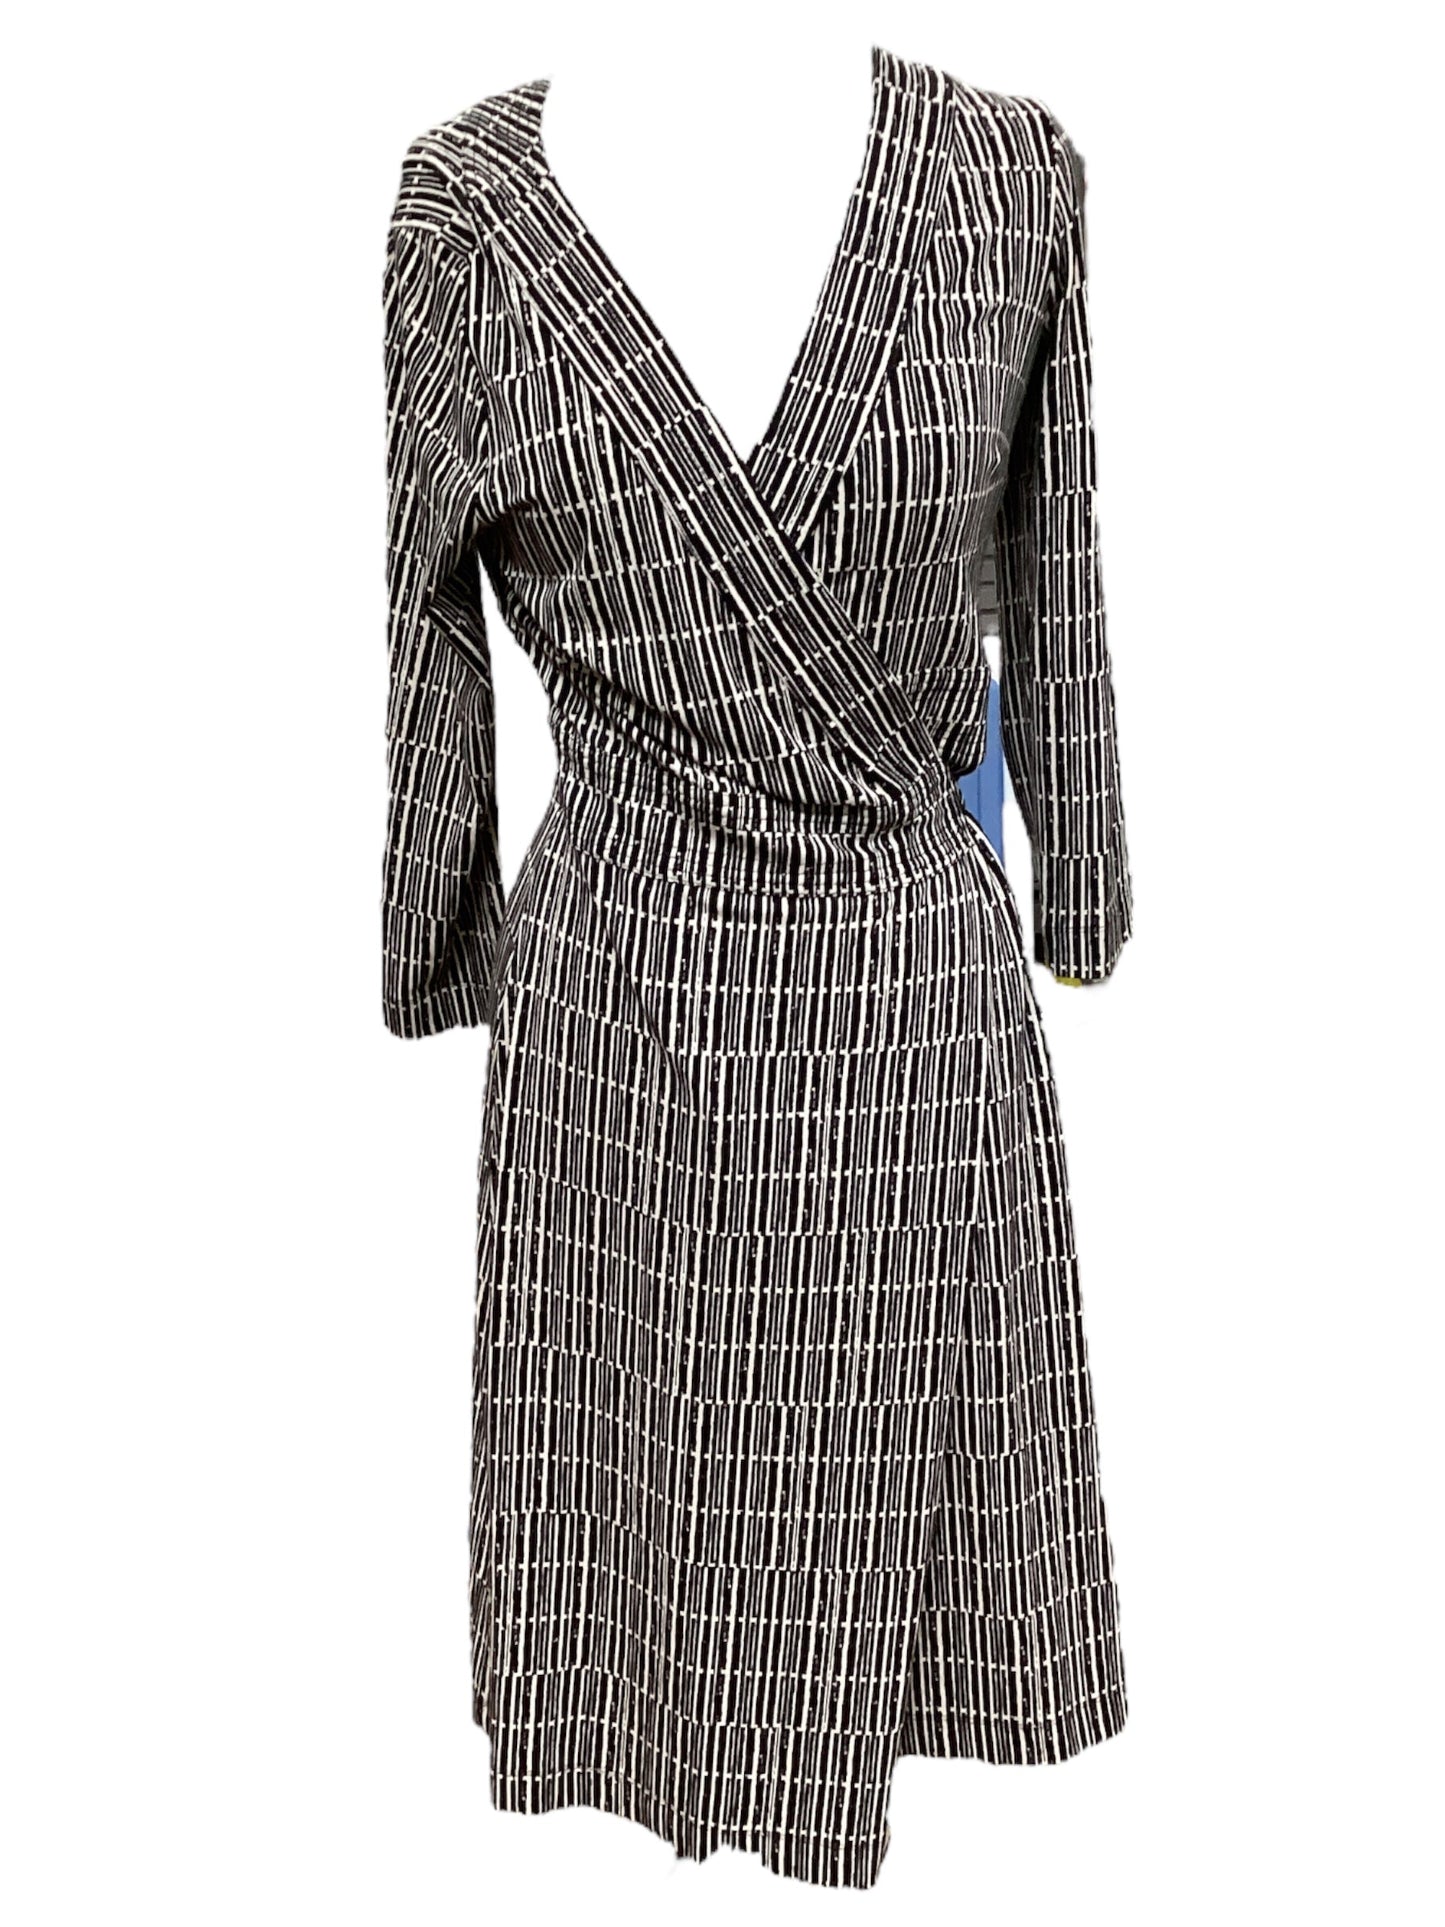 Dress Casual Midi By Ann Taylor  Size: 4